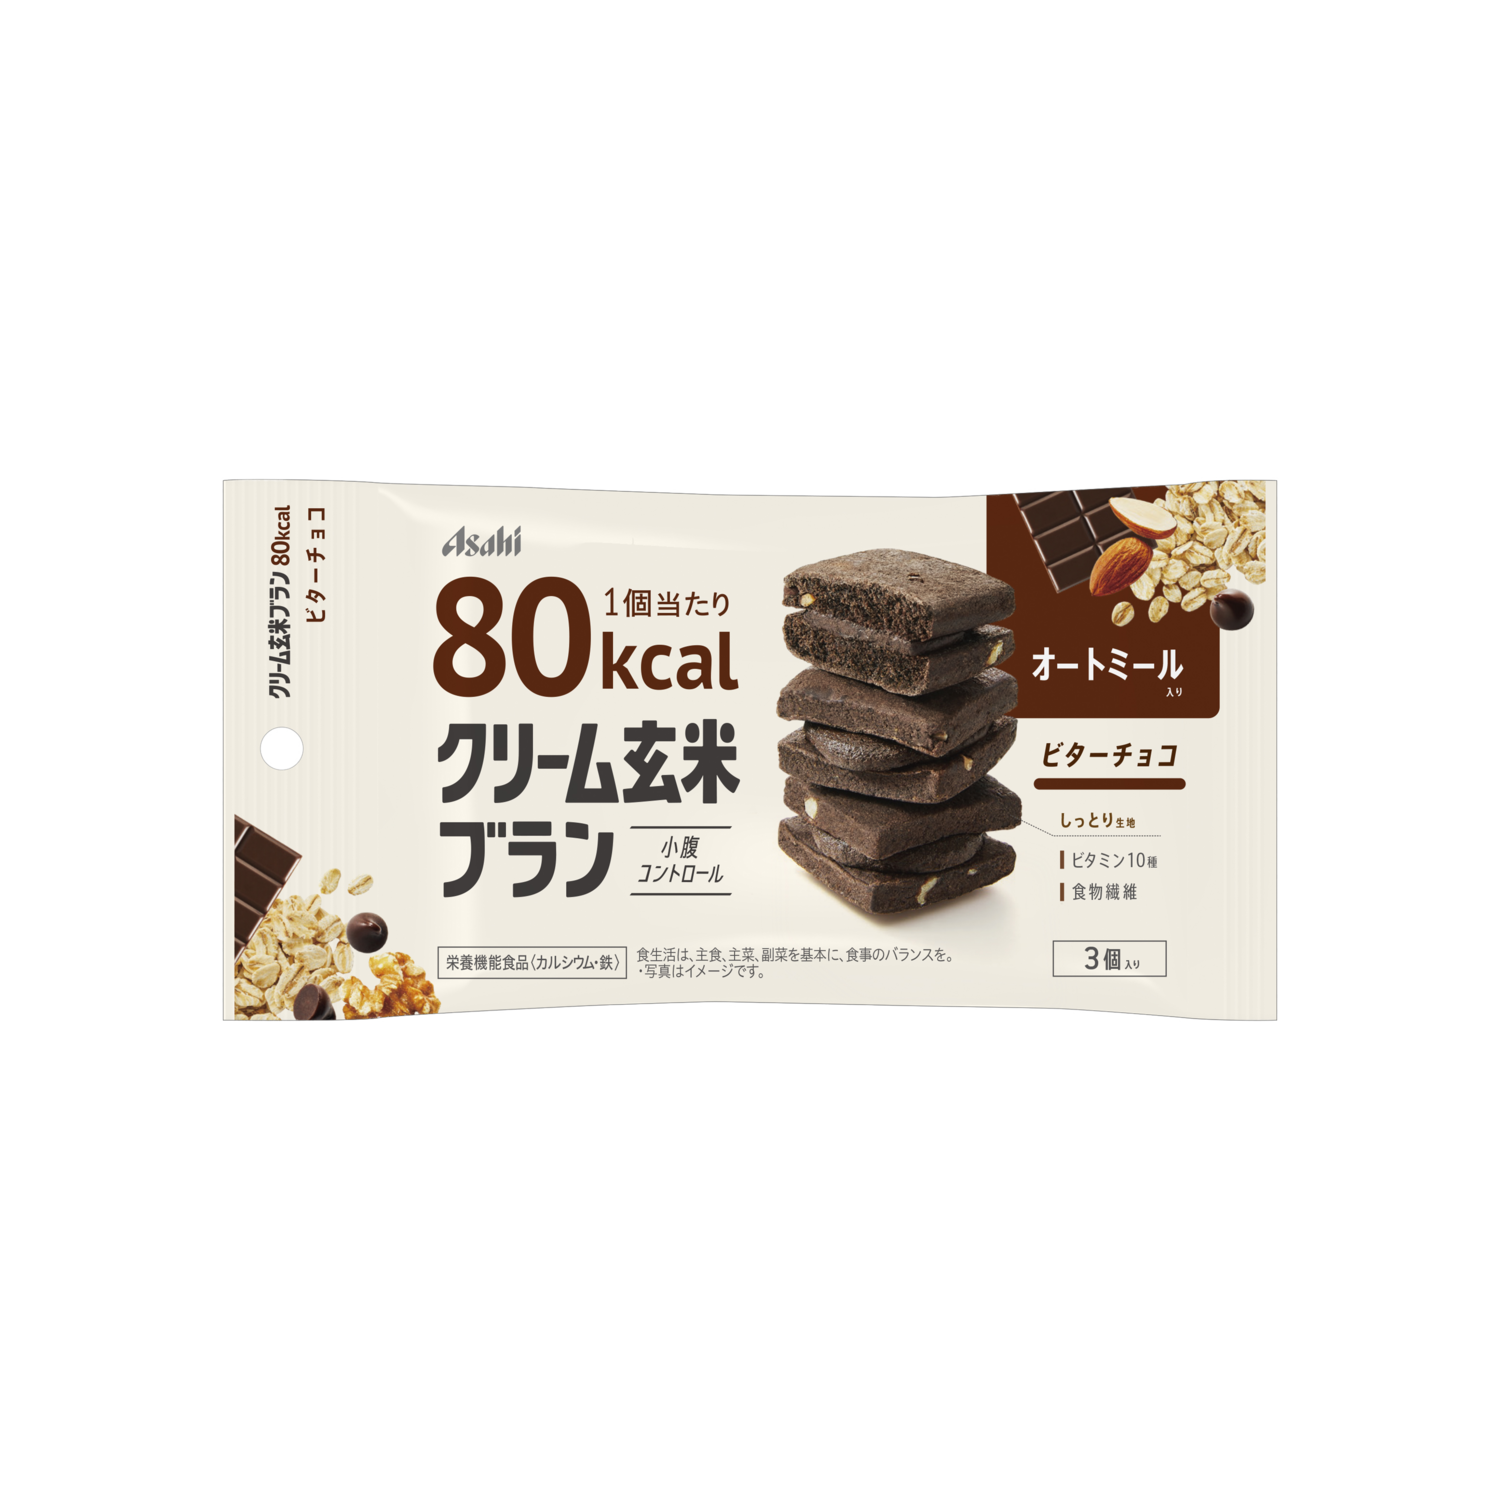 Asahi 80kcal Chocolate Genmai Brownie (54G)